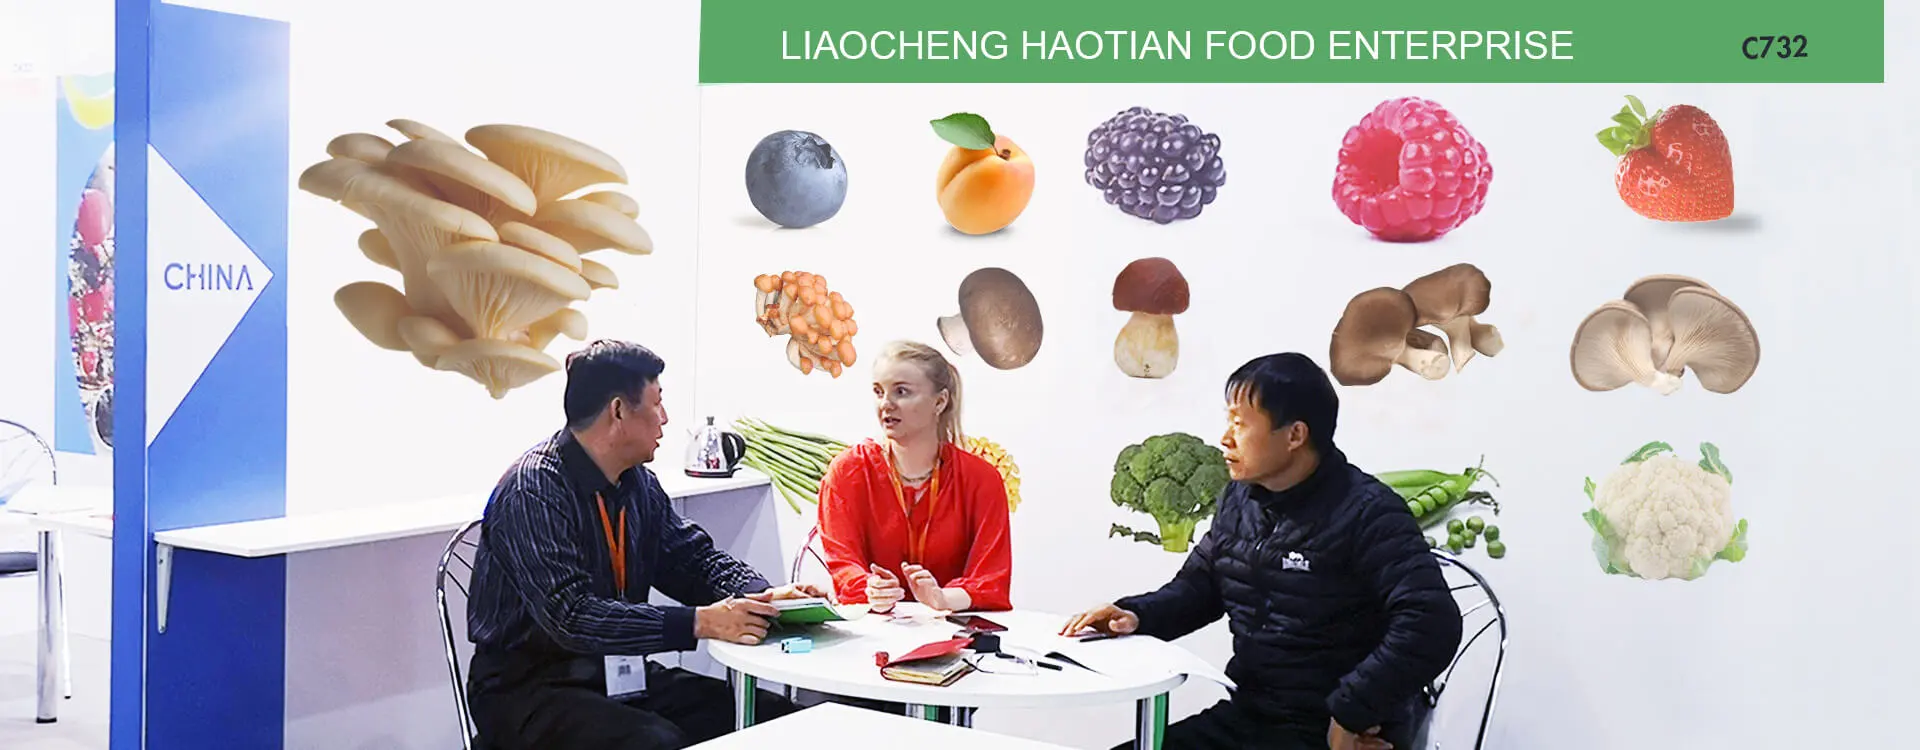 Liaocheng Haotian Food Enterprise